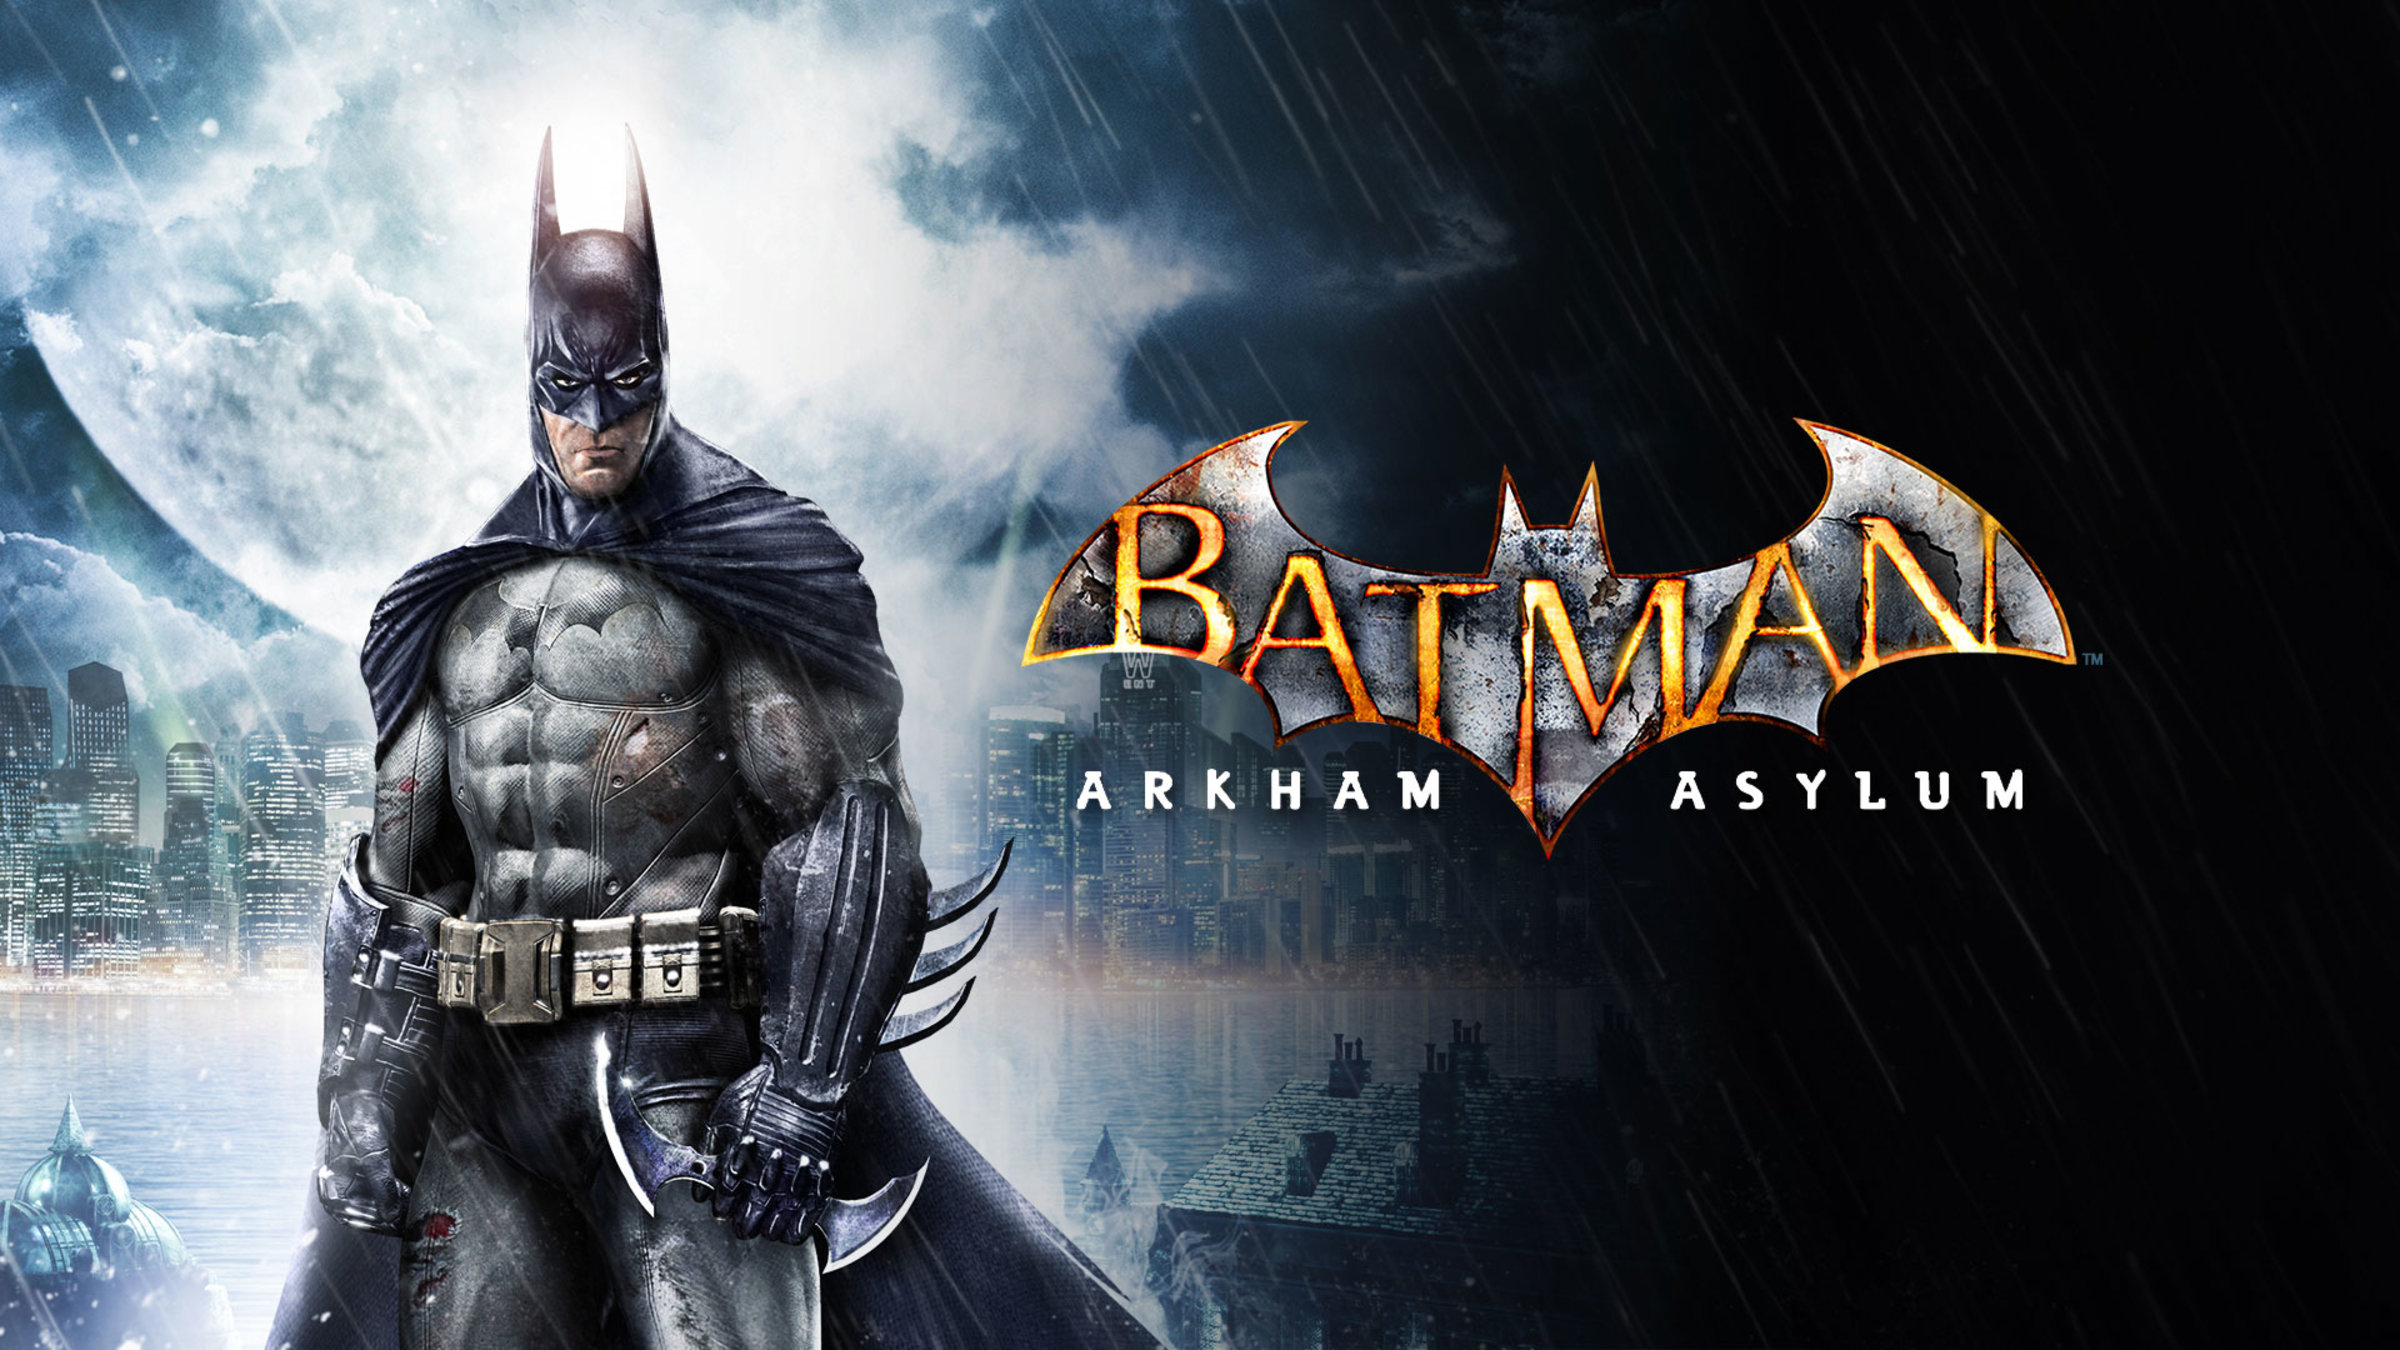 Batman: Arkham Knight for Nintendo Switch - Nintendo Official Site